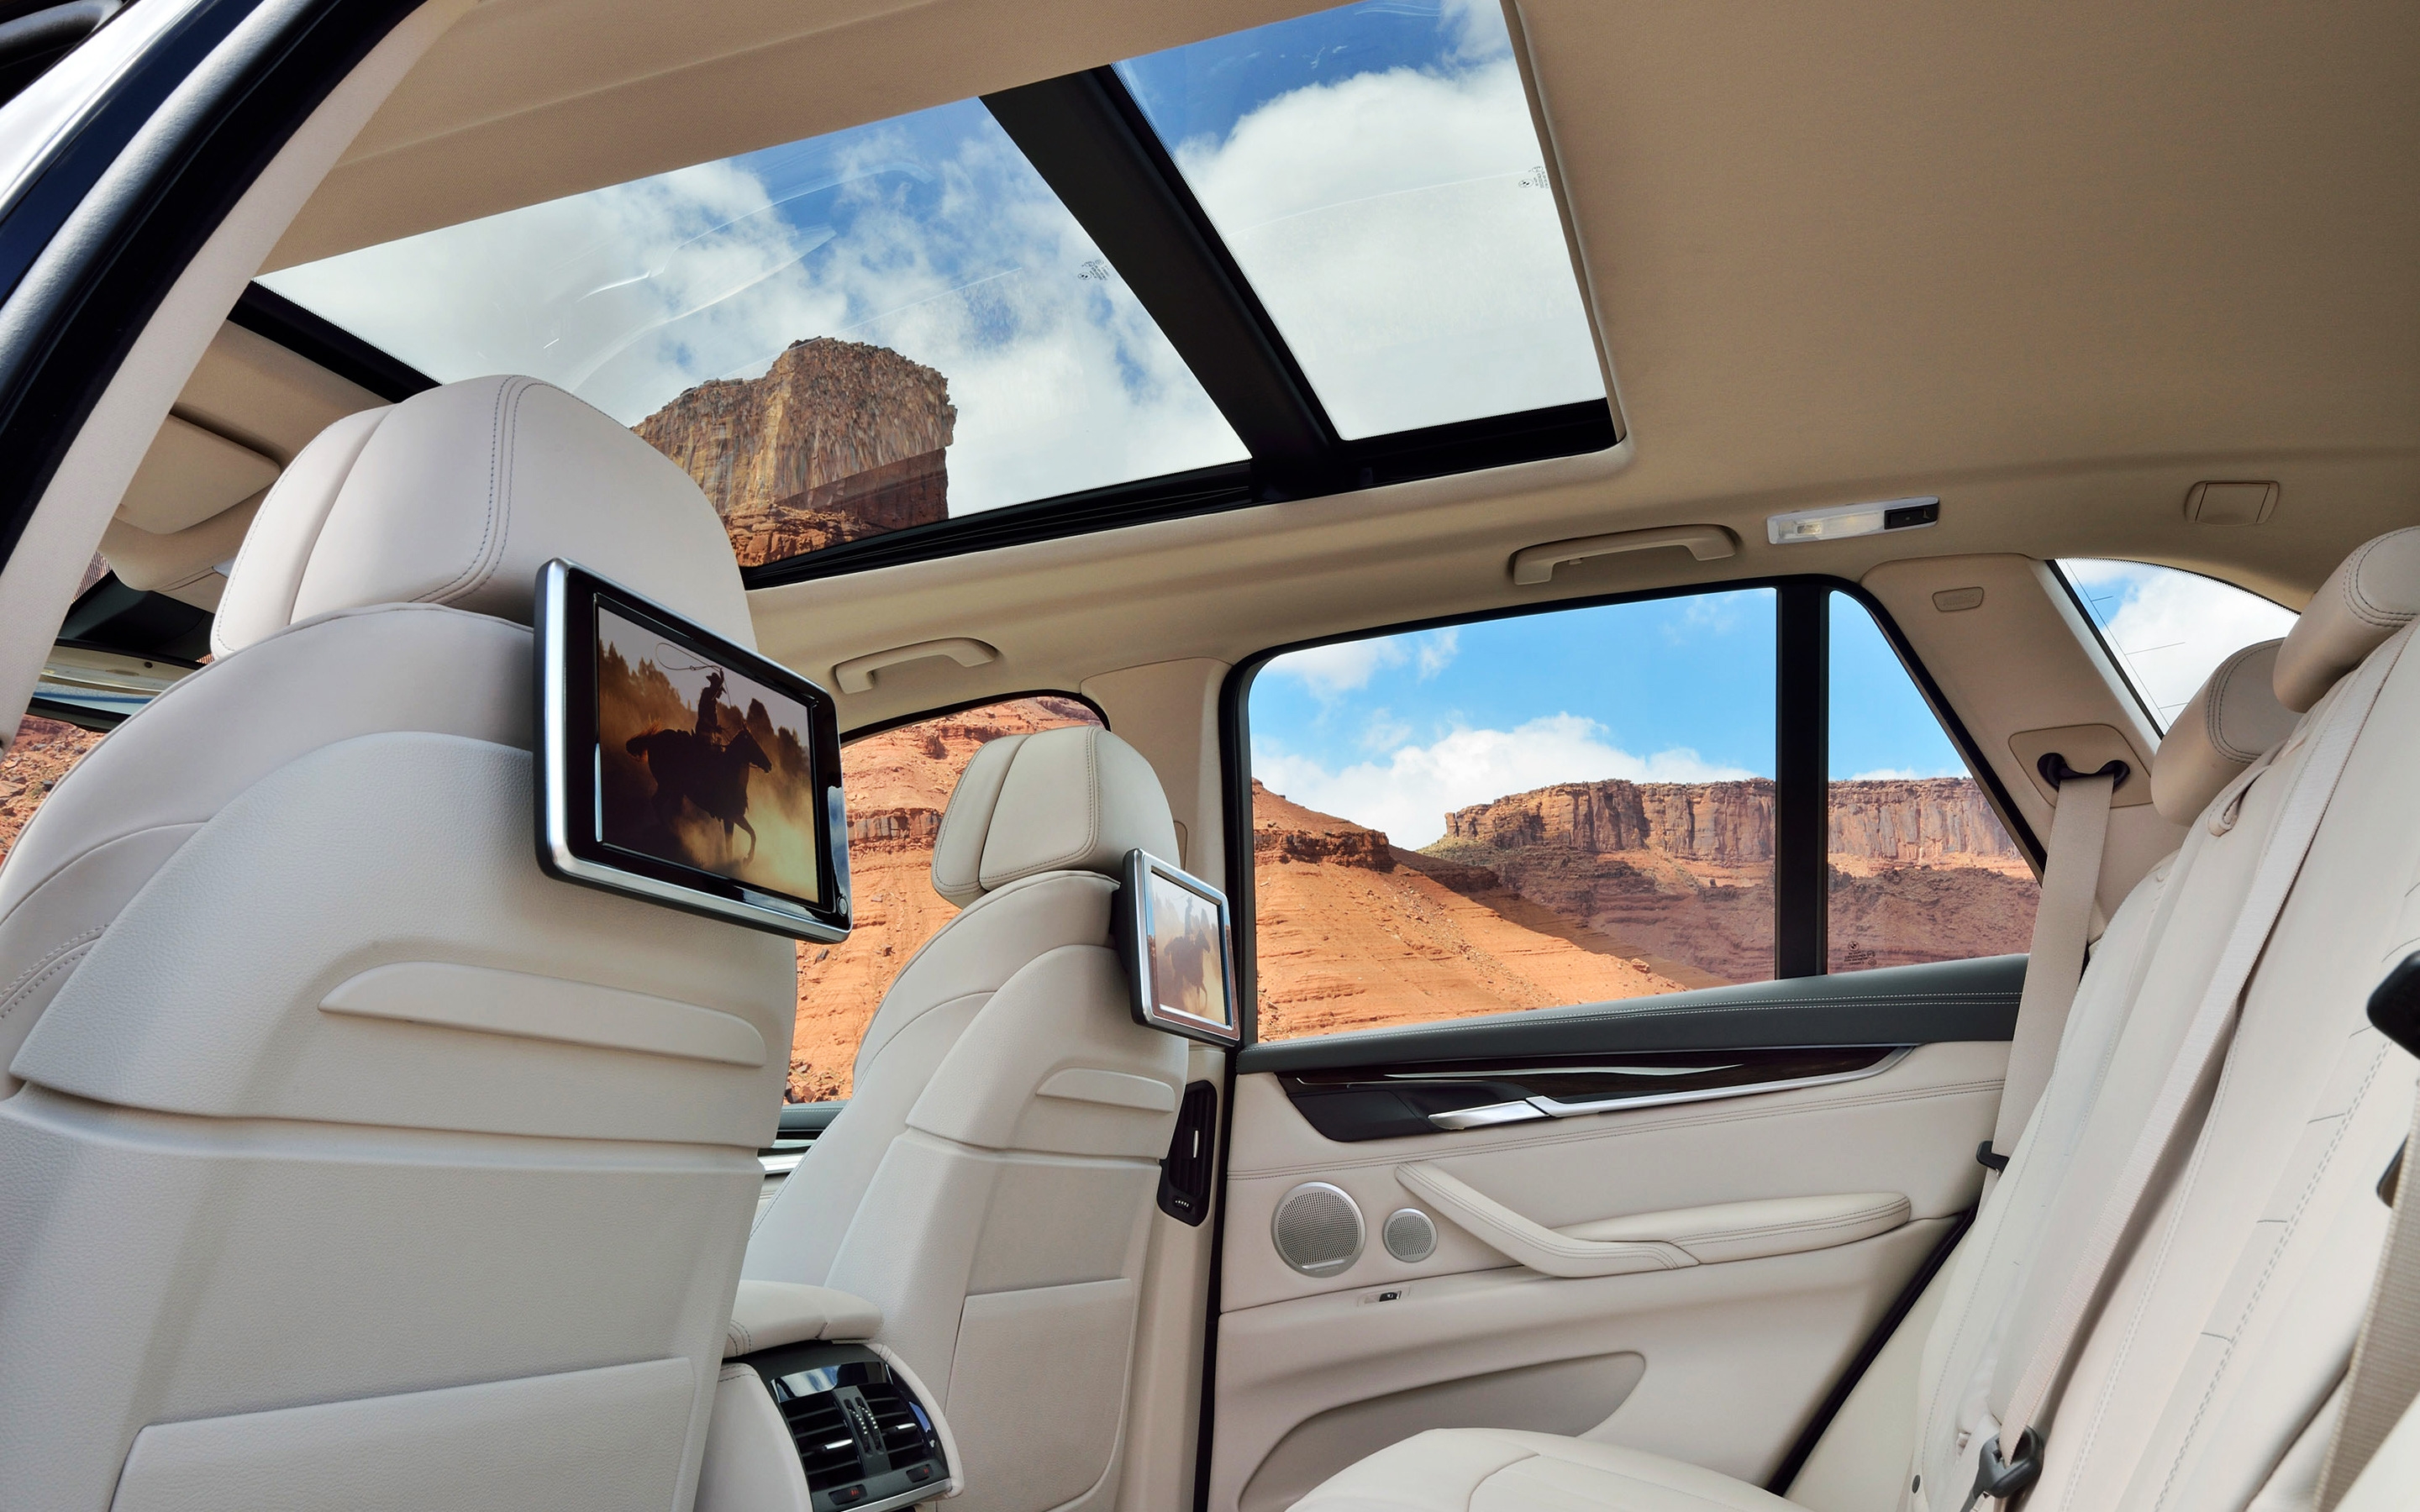 2014 BMW X5 Interior for 2880 x 1800 Retina Display resolution